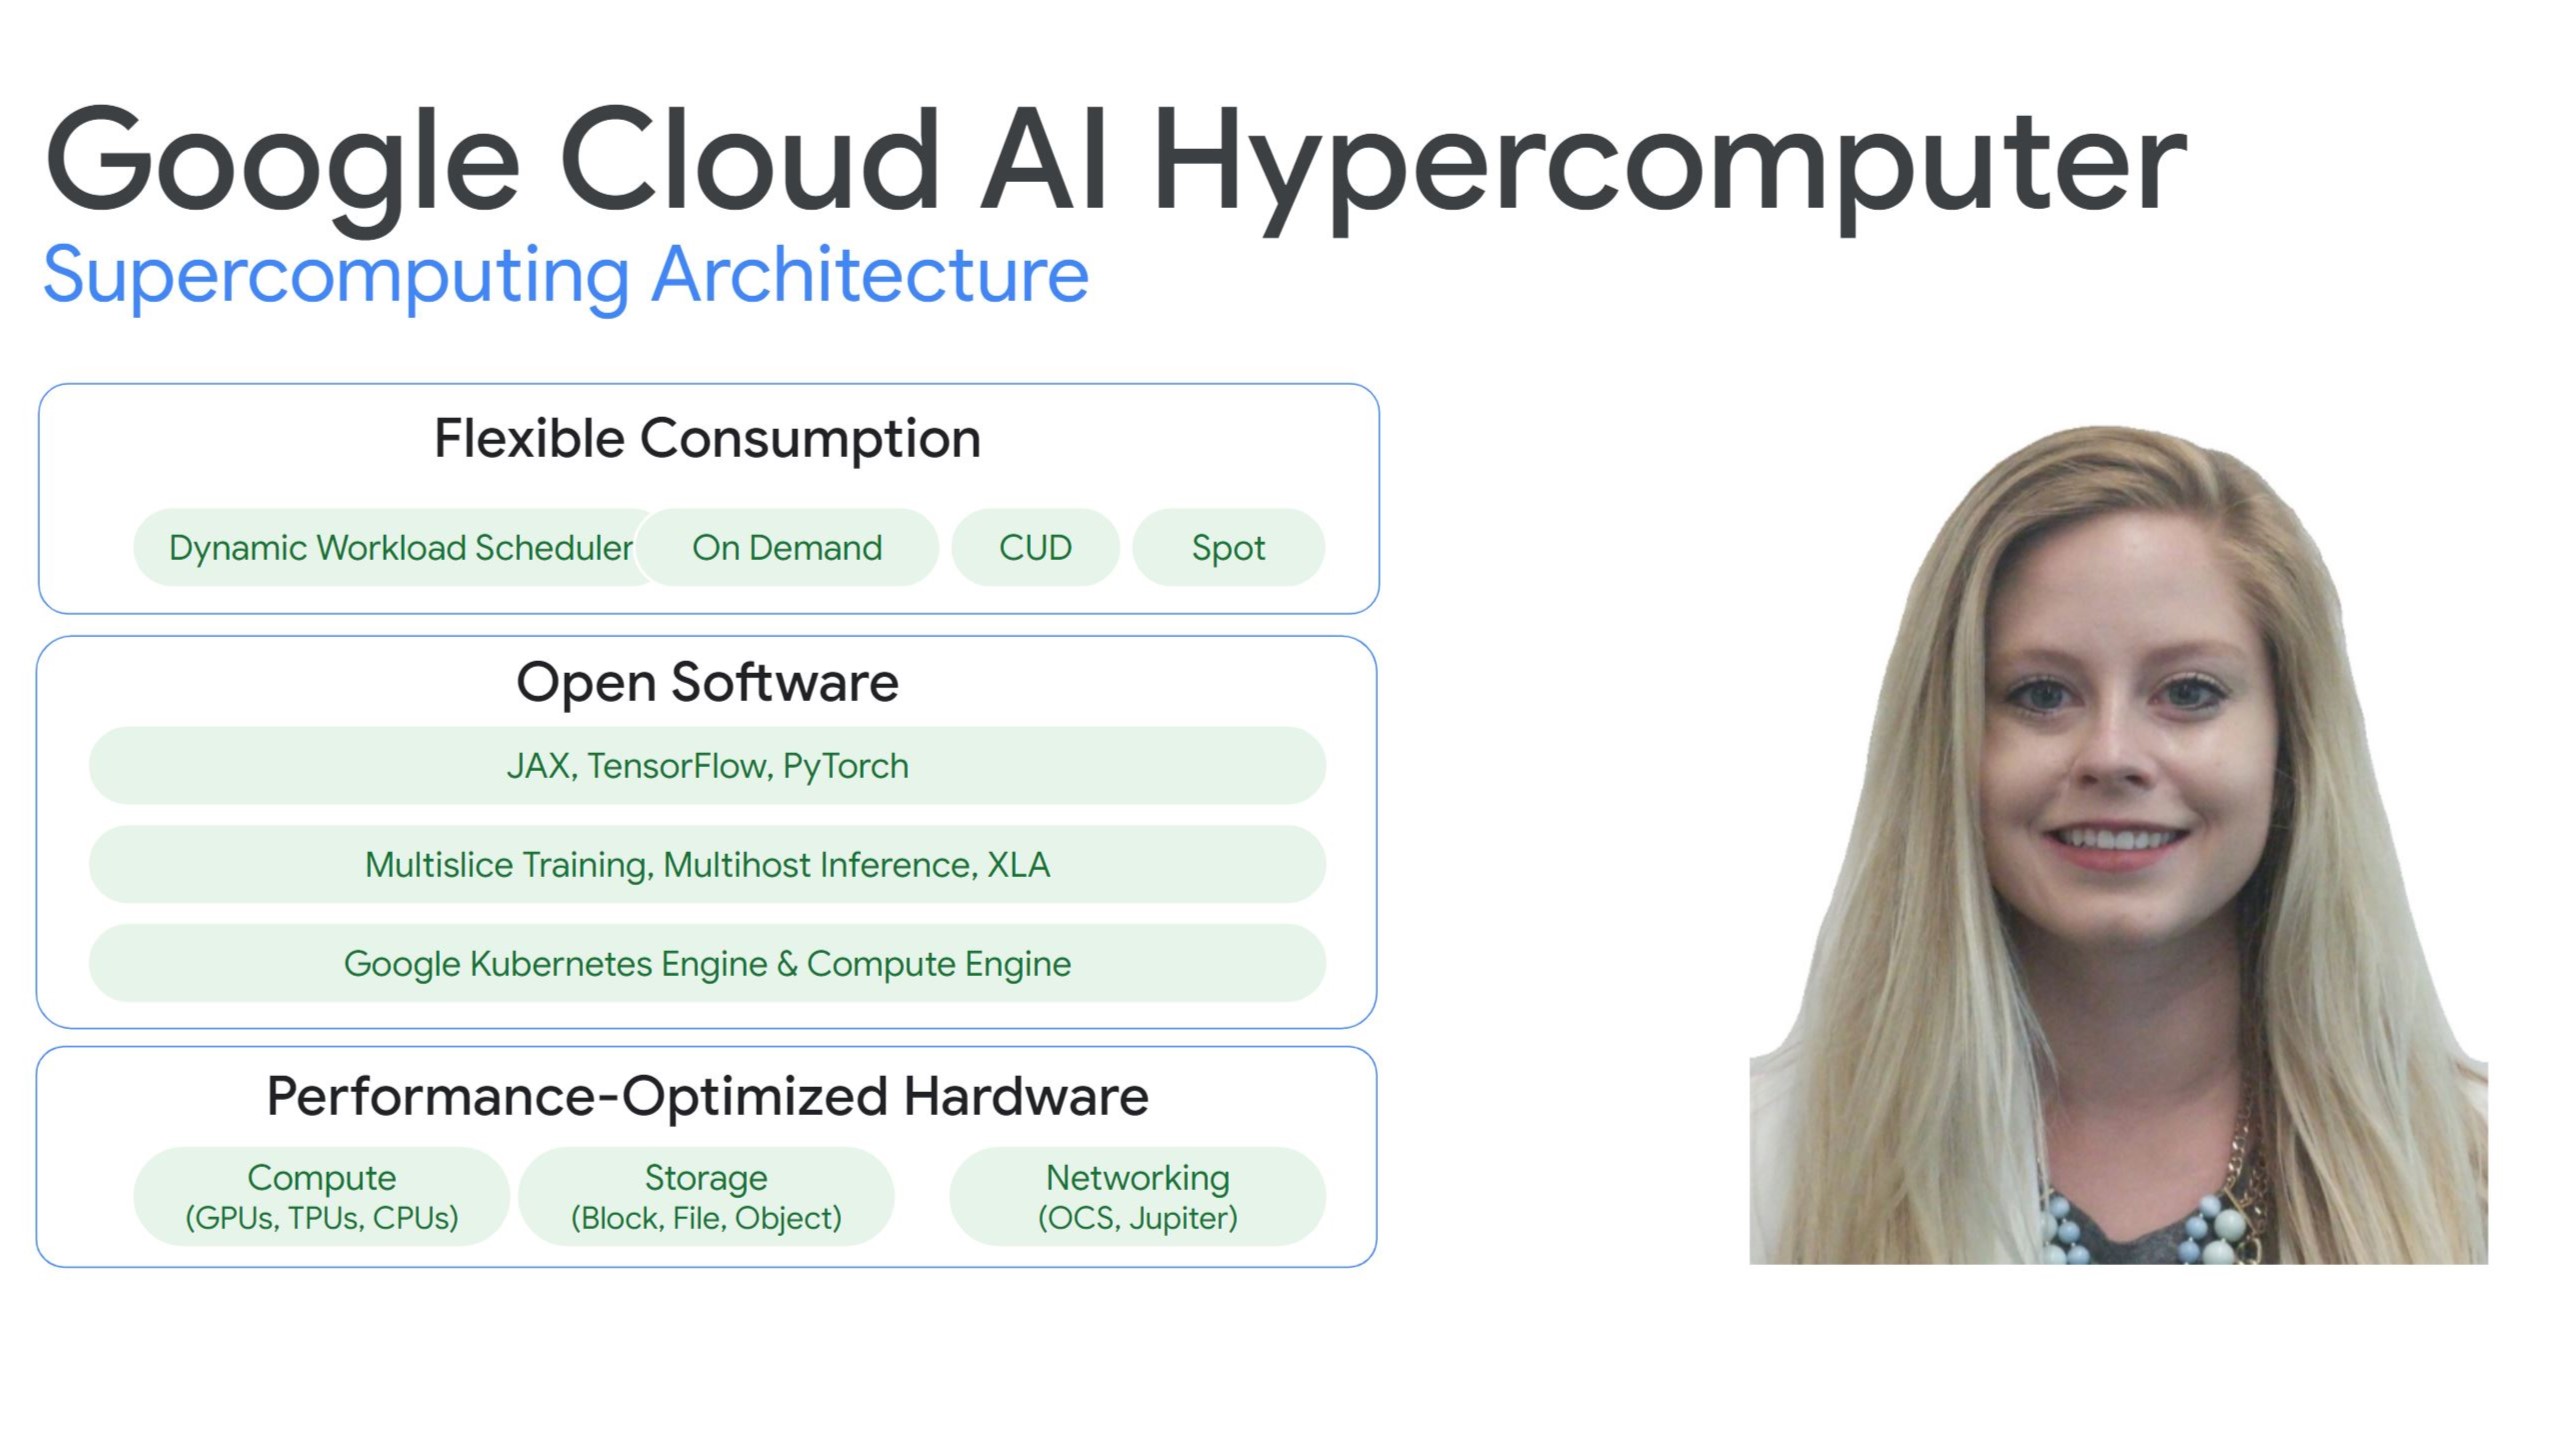 Google Cloud AI Hypercomputer architecture diagram alongside the Google Cloud product manager Chelsie's photo